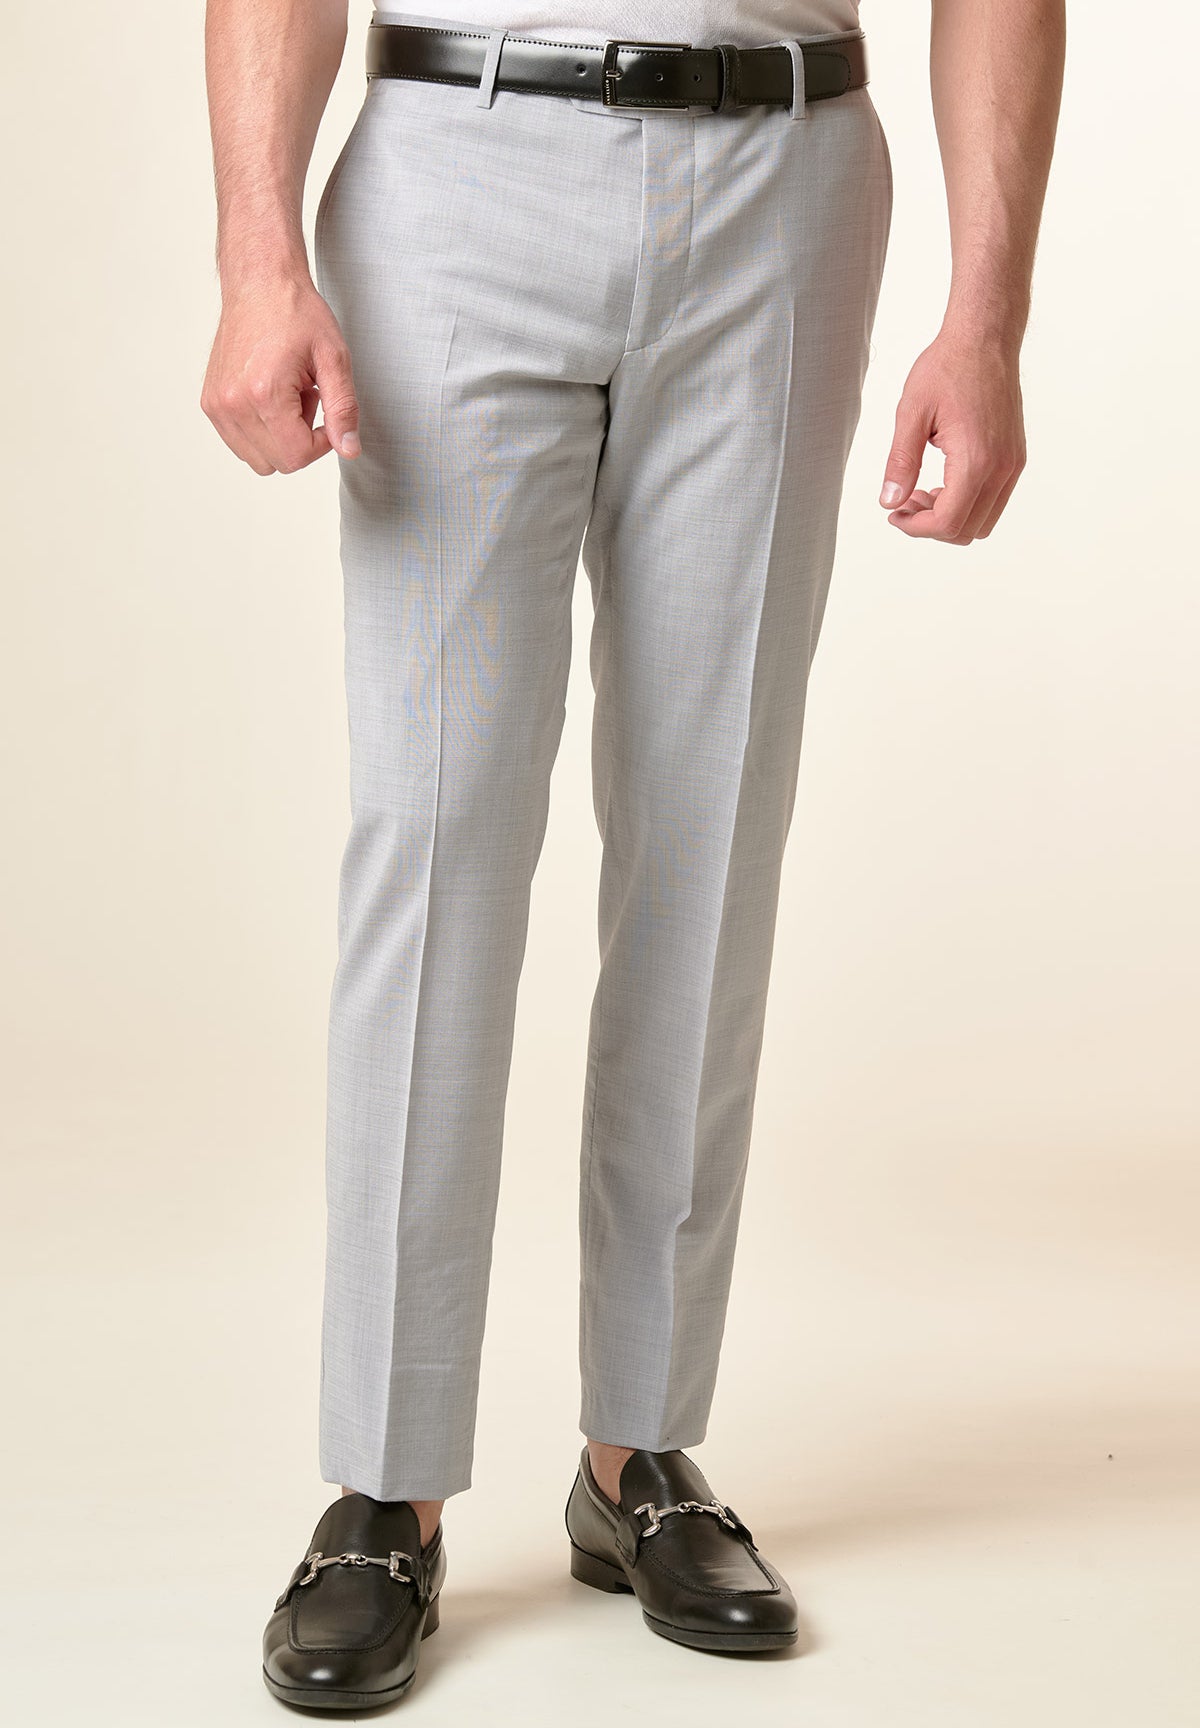 Pantalone grigio chiaro tela lana stretch custom fit